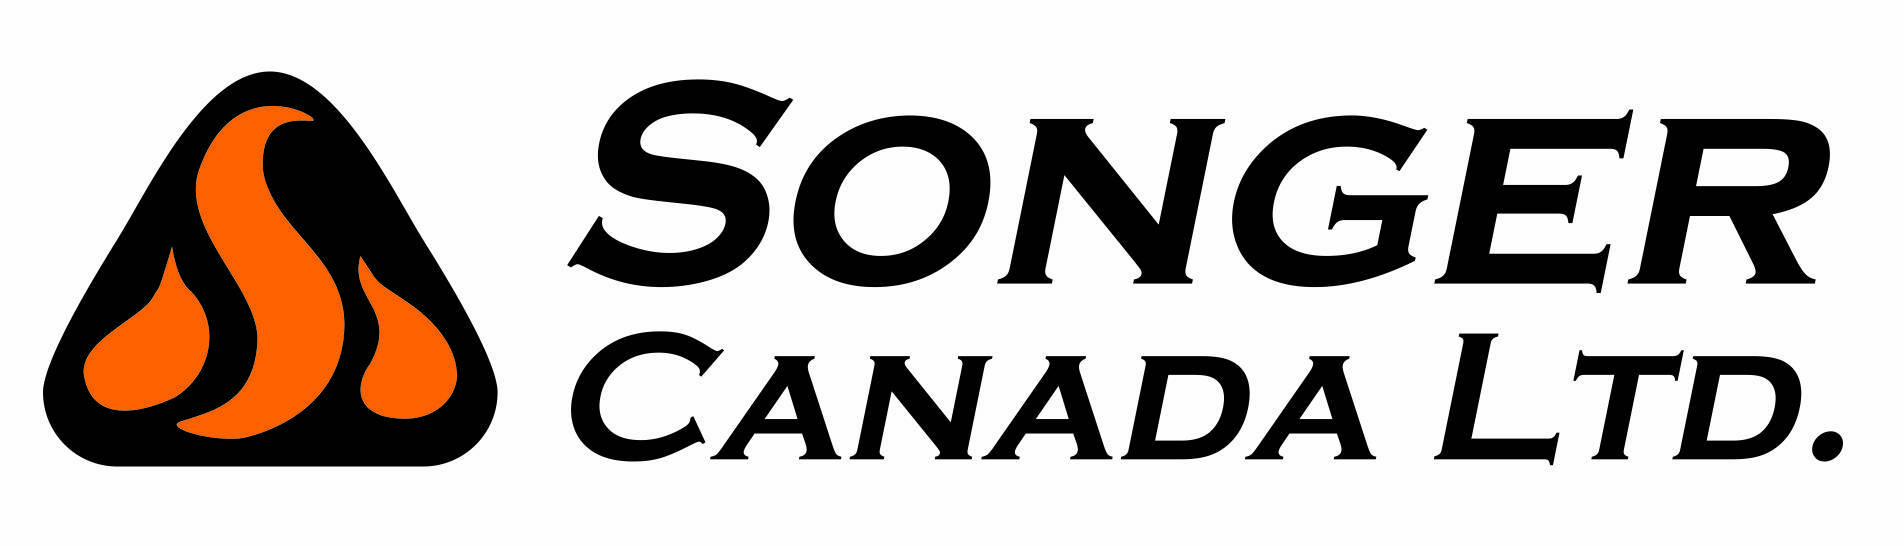 Songer Canada Ltd.